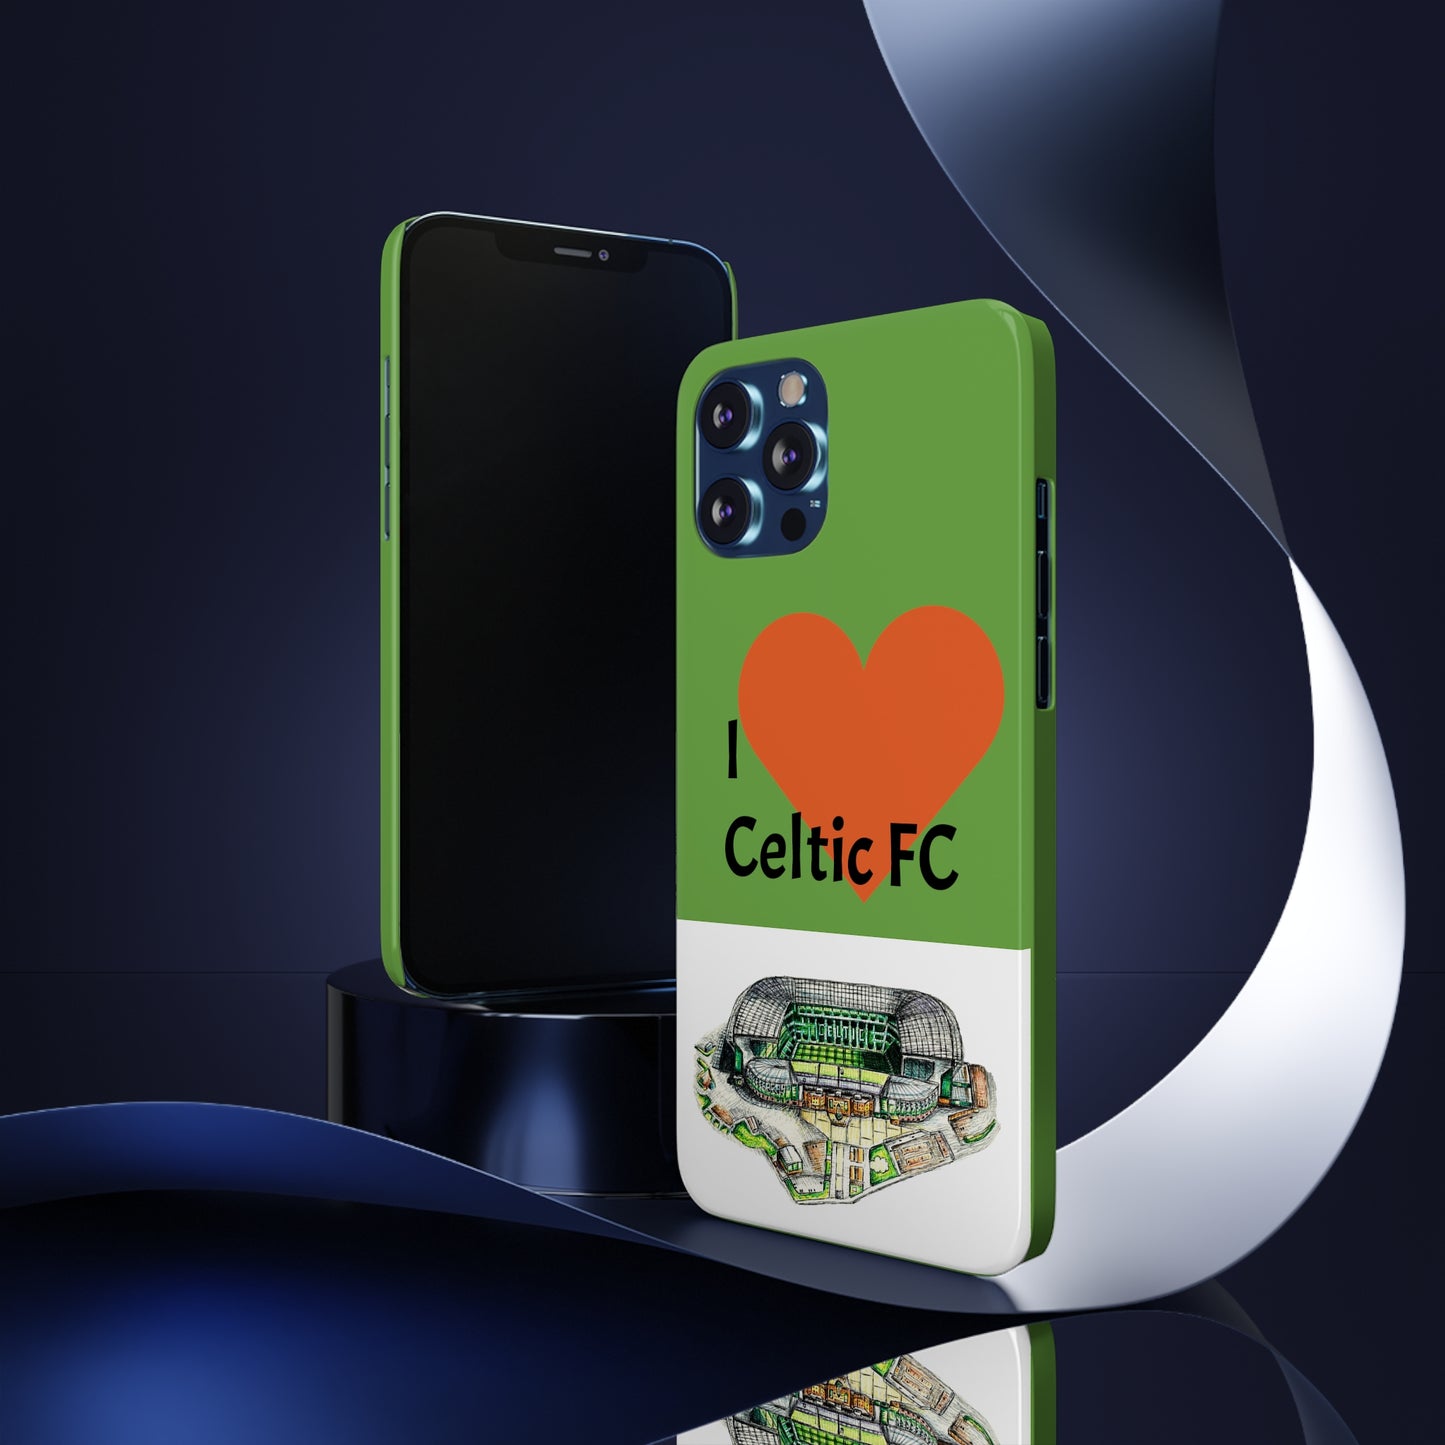 Slim Phone Case- I Love Celtic FC Design